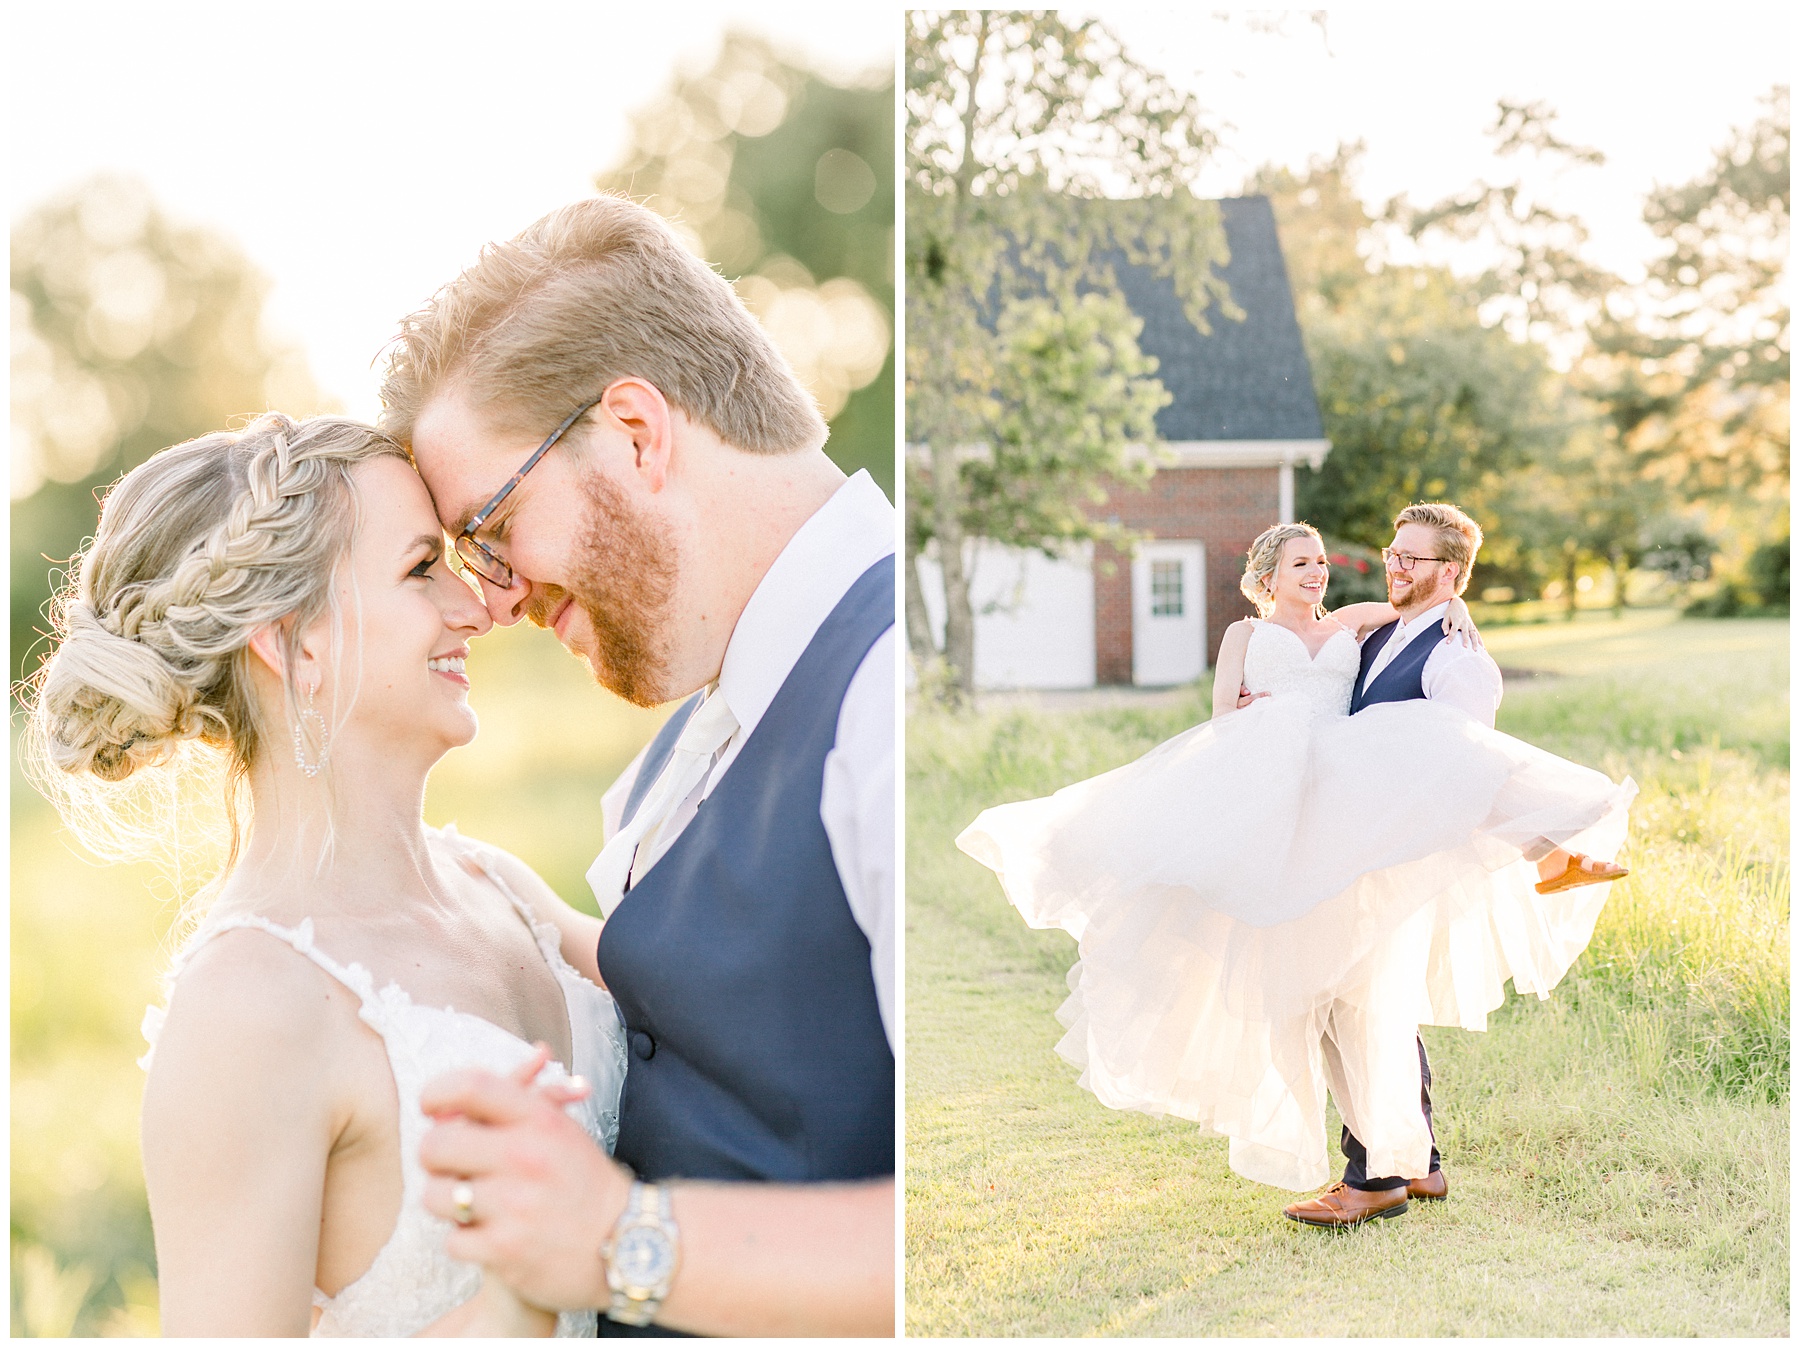 Goldsboro North Carolina sage green and blush Coronavirus wedding. Raleigh NC golden hour bride and groom